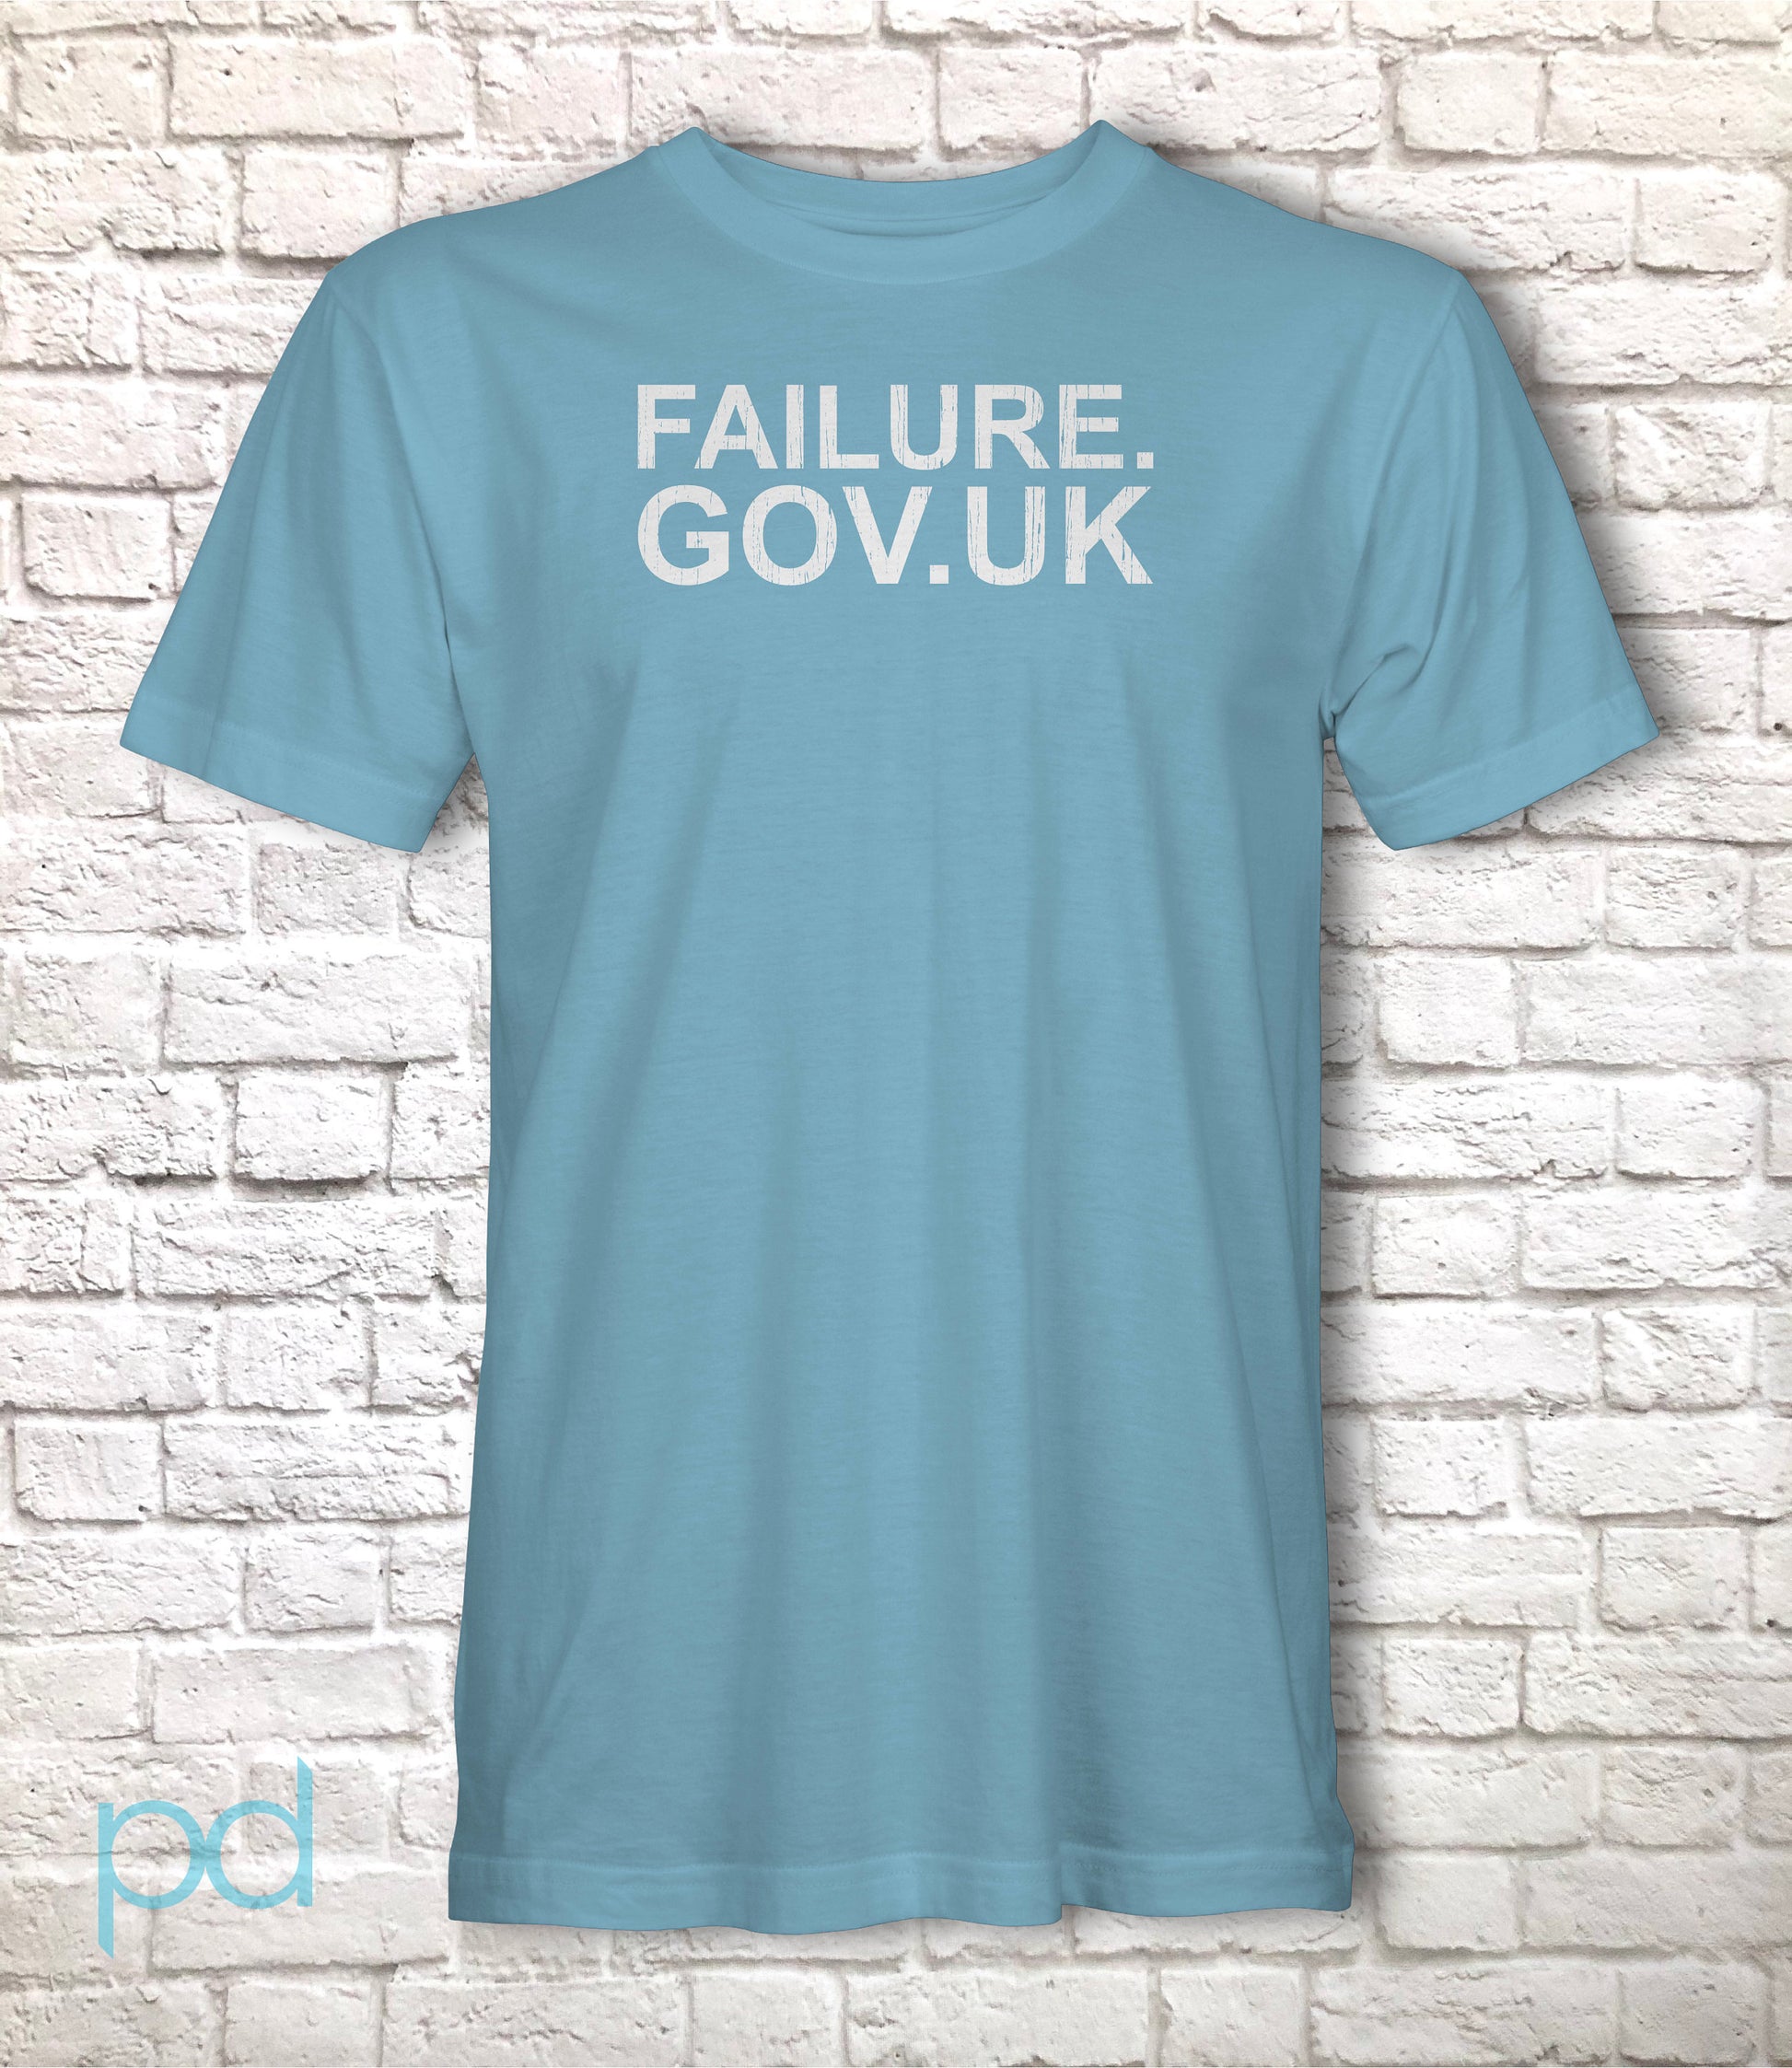 Anti-Government T-Shirt, Tory Failure Tee Shirt, Tories & Conservative Epic Fail failure.gov.uk, Unisex Short Sleeve Graphic Print Top